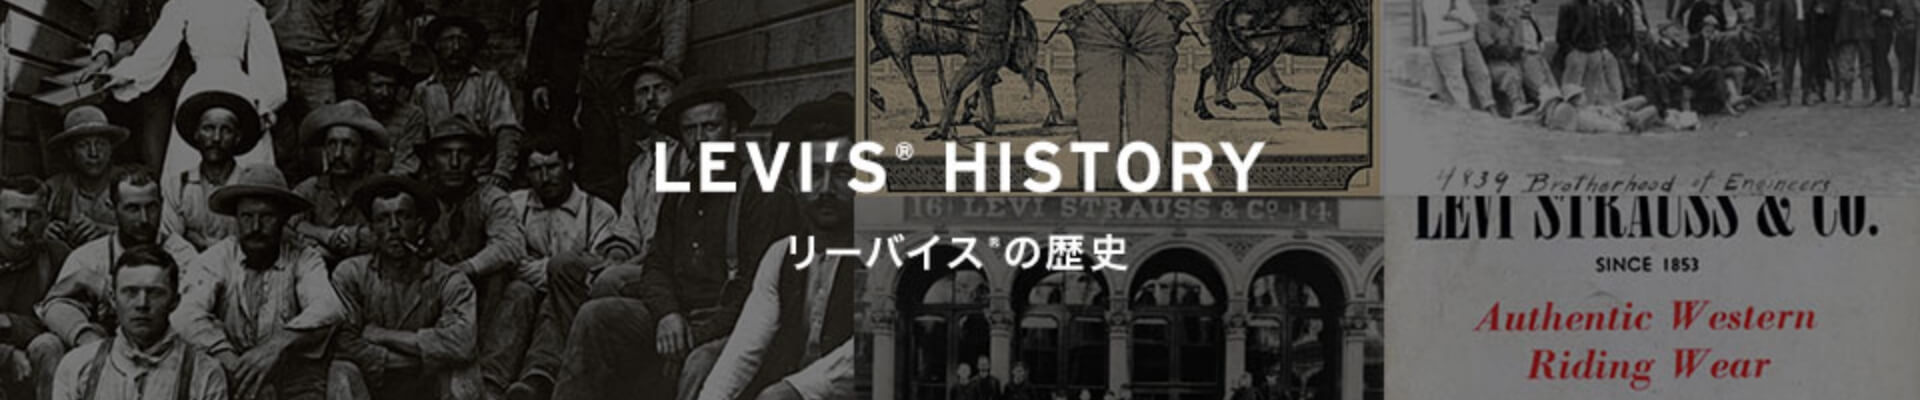 LEVI'S HISTORY リーバイスの歴史